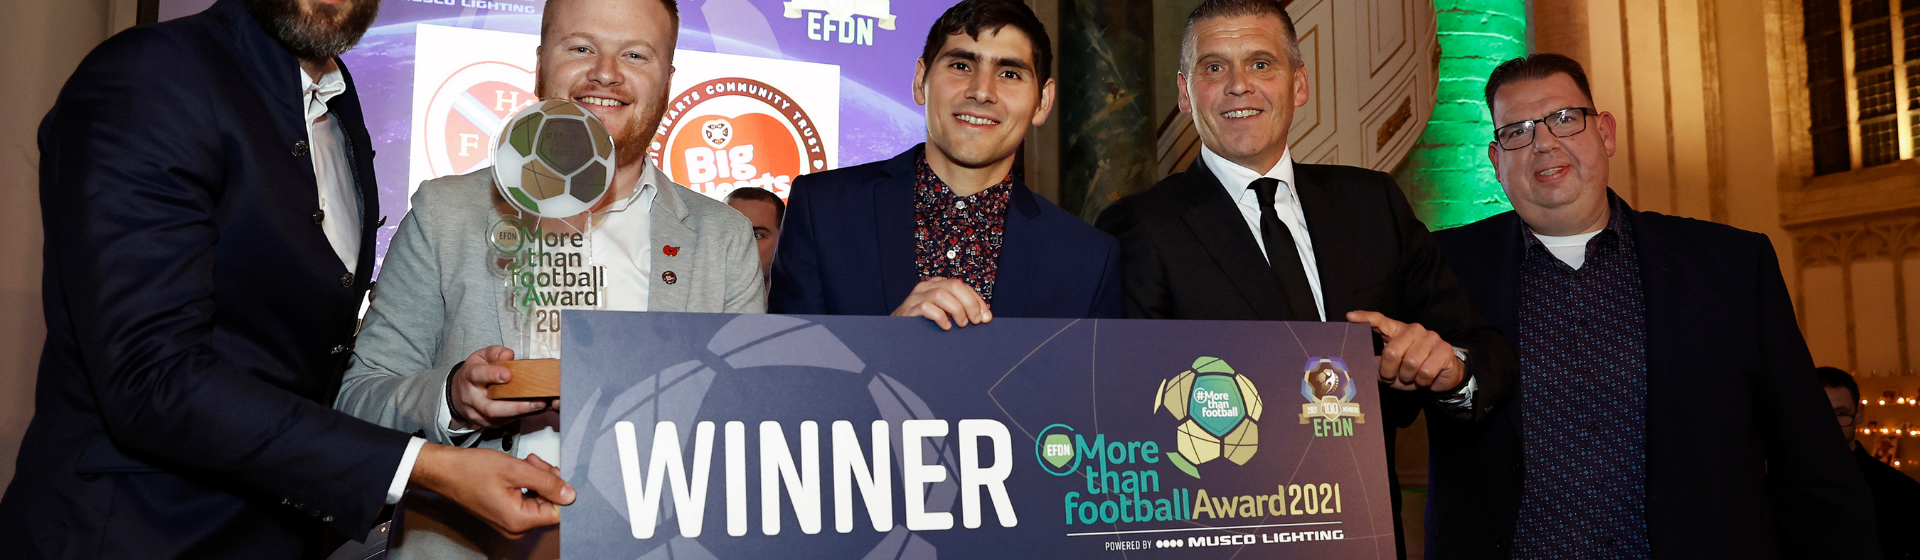 More Football Award powered Musco - Morethanfootball.eu